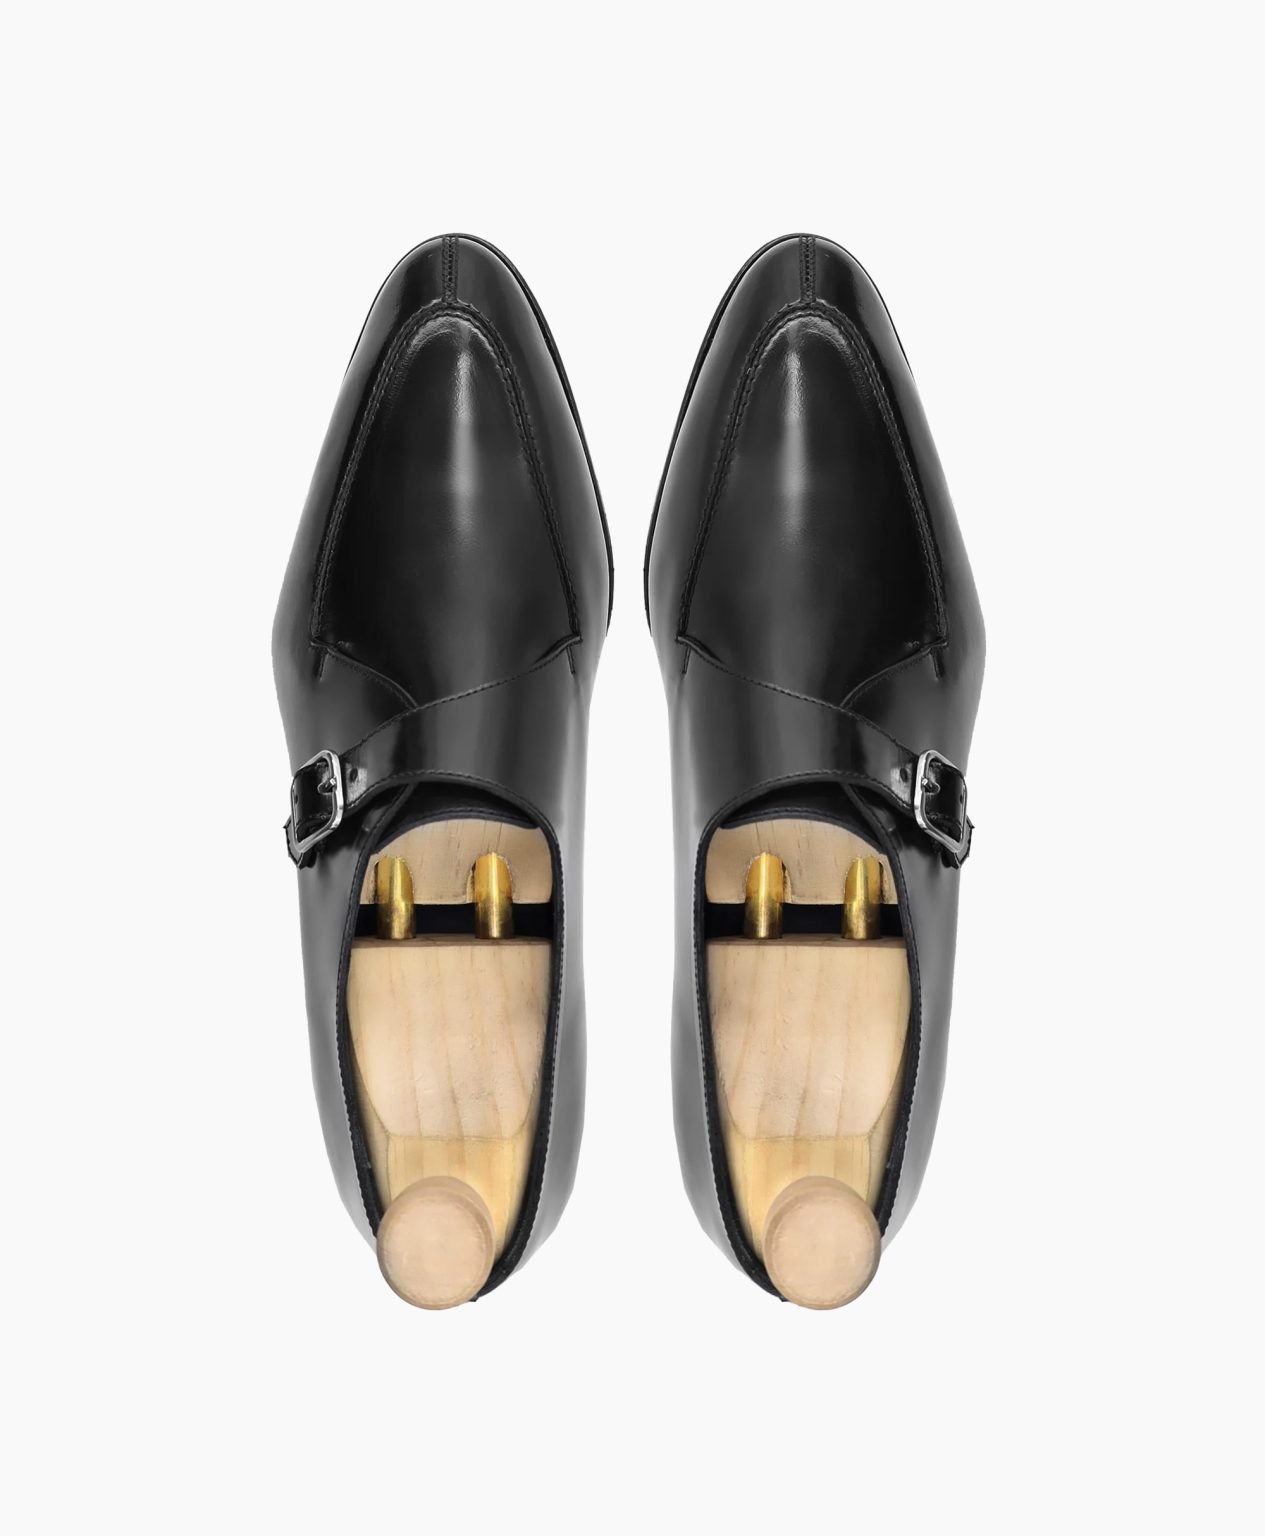 ashburton-single-monkstrap-black-leather-shoes-image202